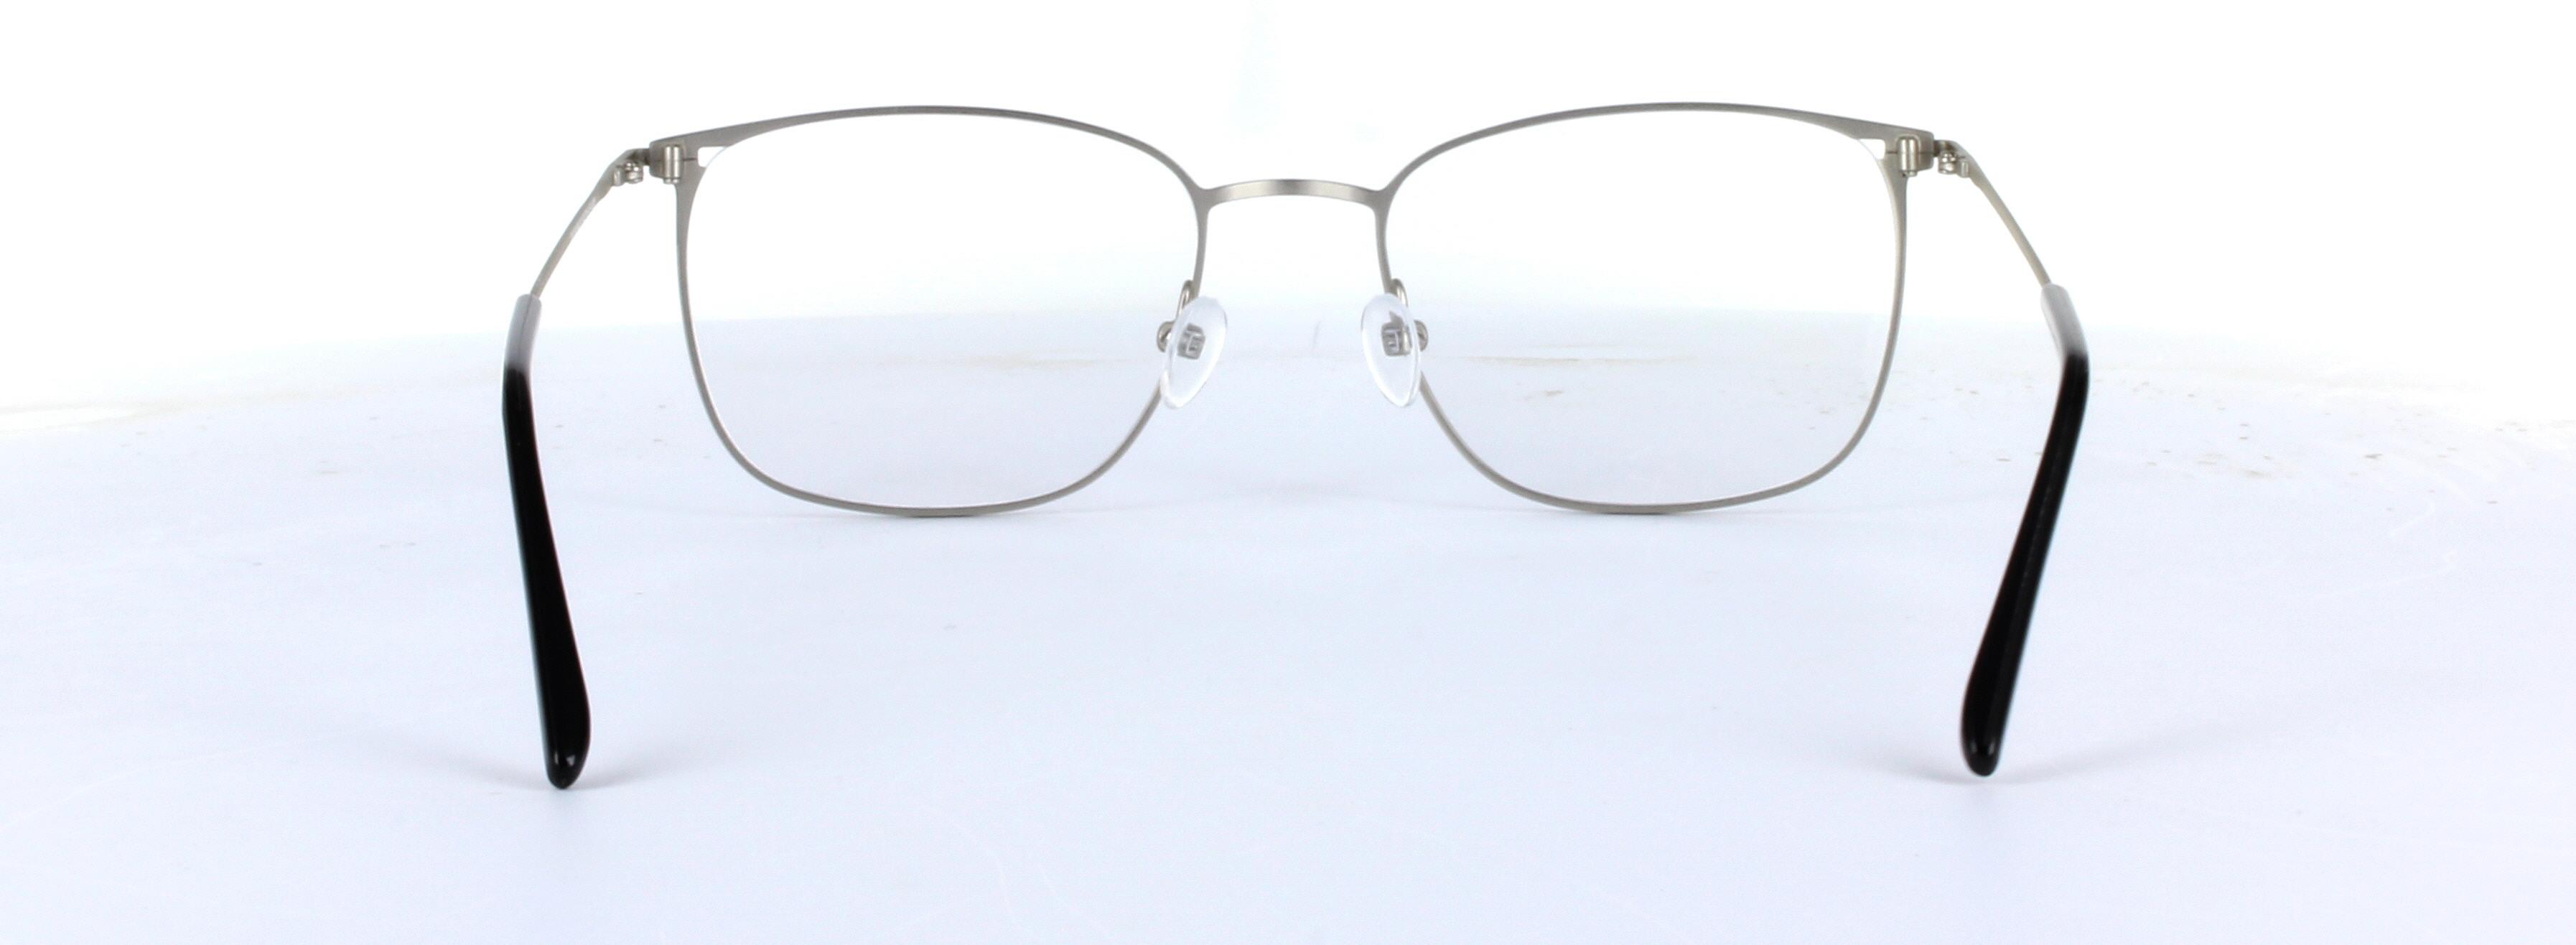 Hayden Olive Full Rim Rectangular Metal Glasses - Image View 3